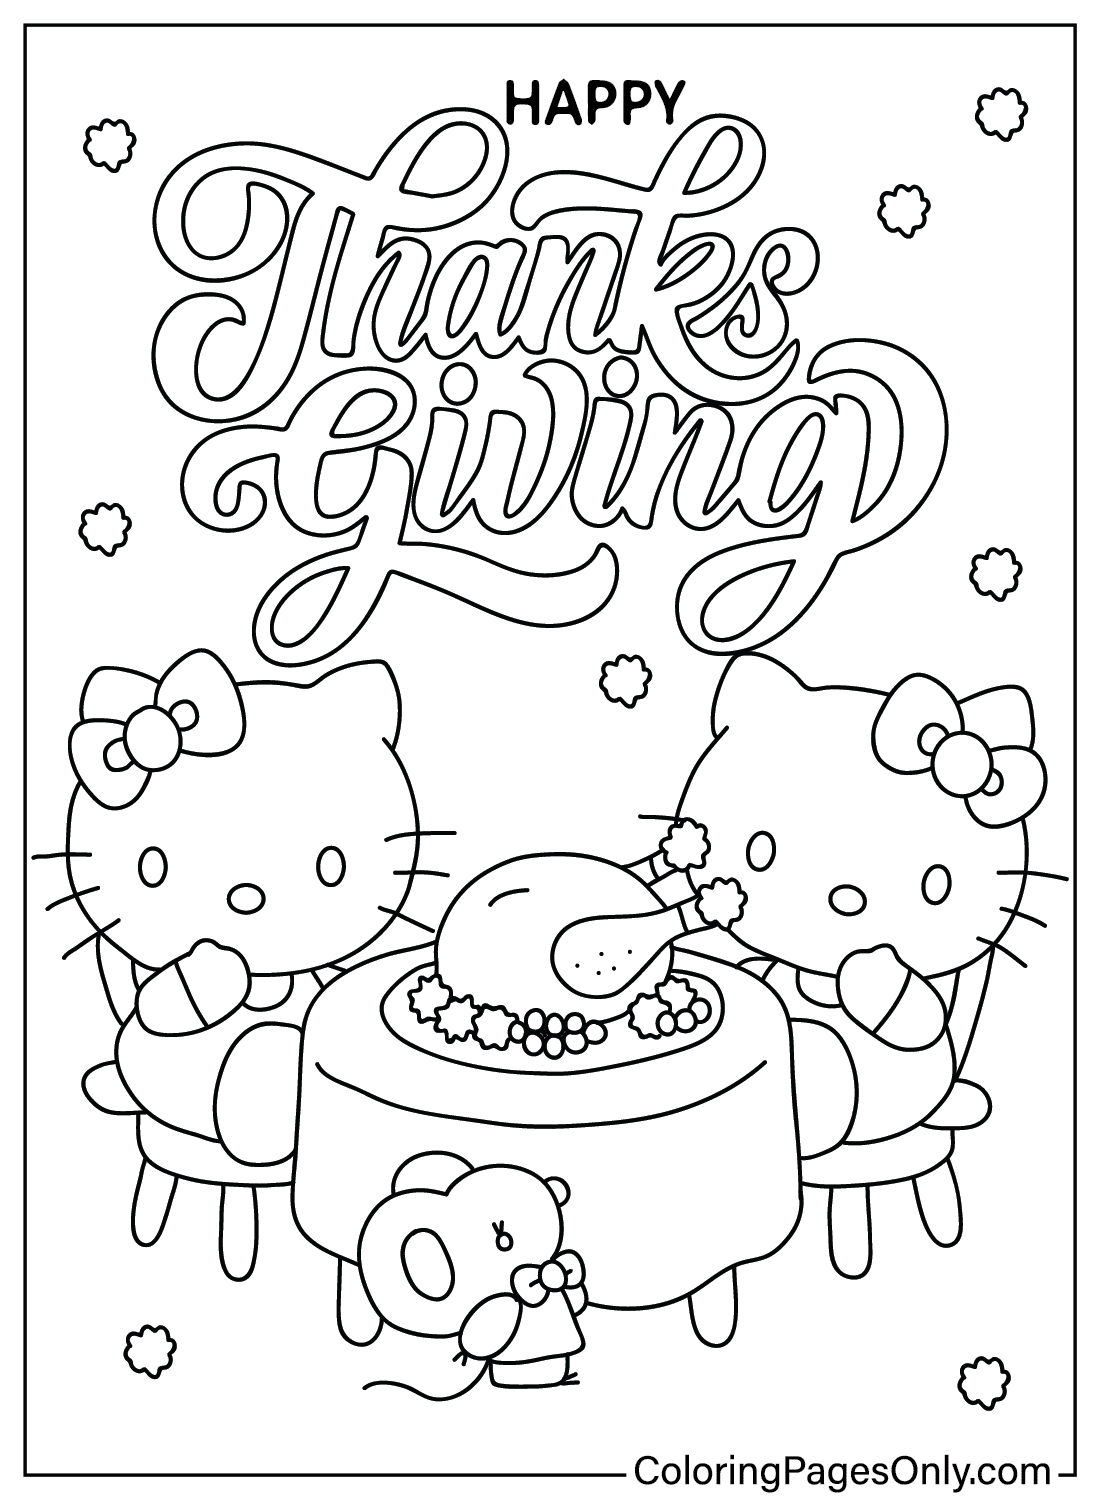 Página para colorear de Acción de Gracias de Hello Kitty de Dibujos animados de Acción de Gracias